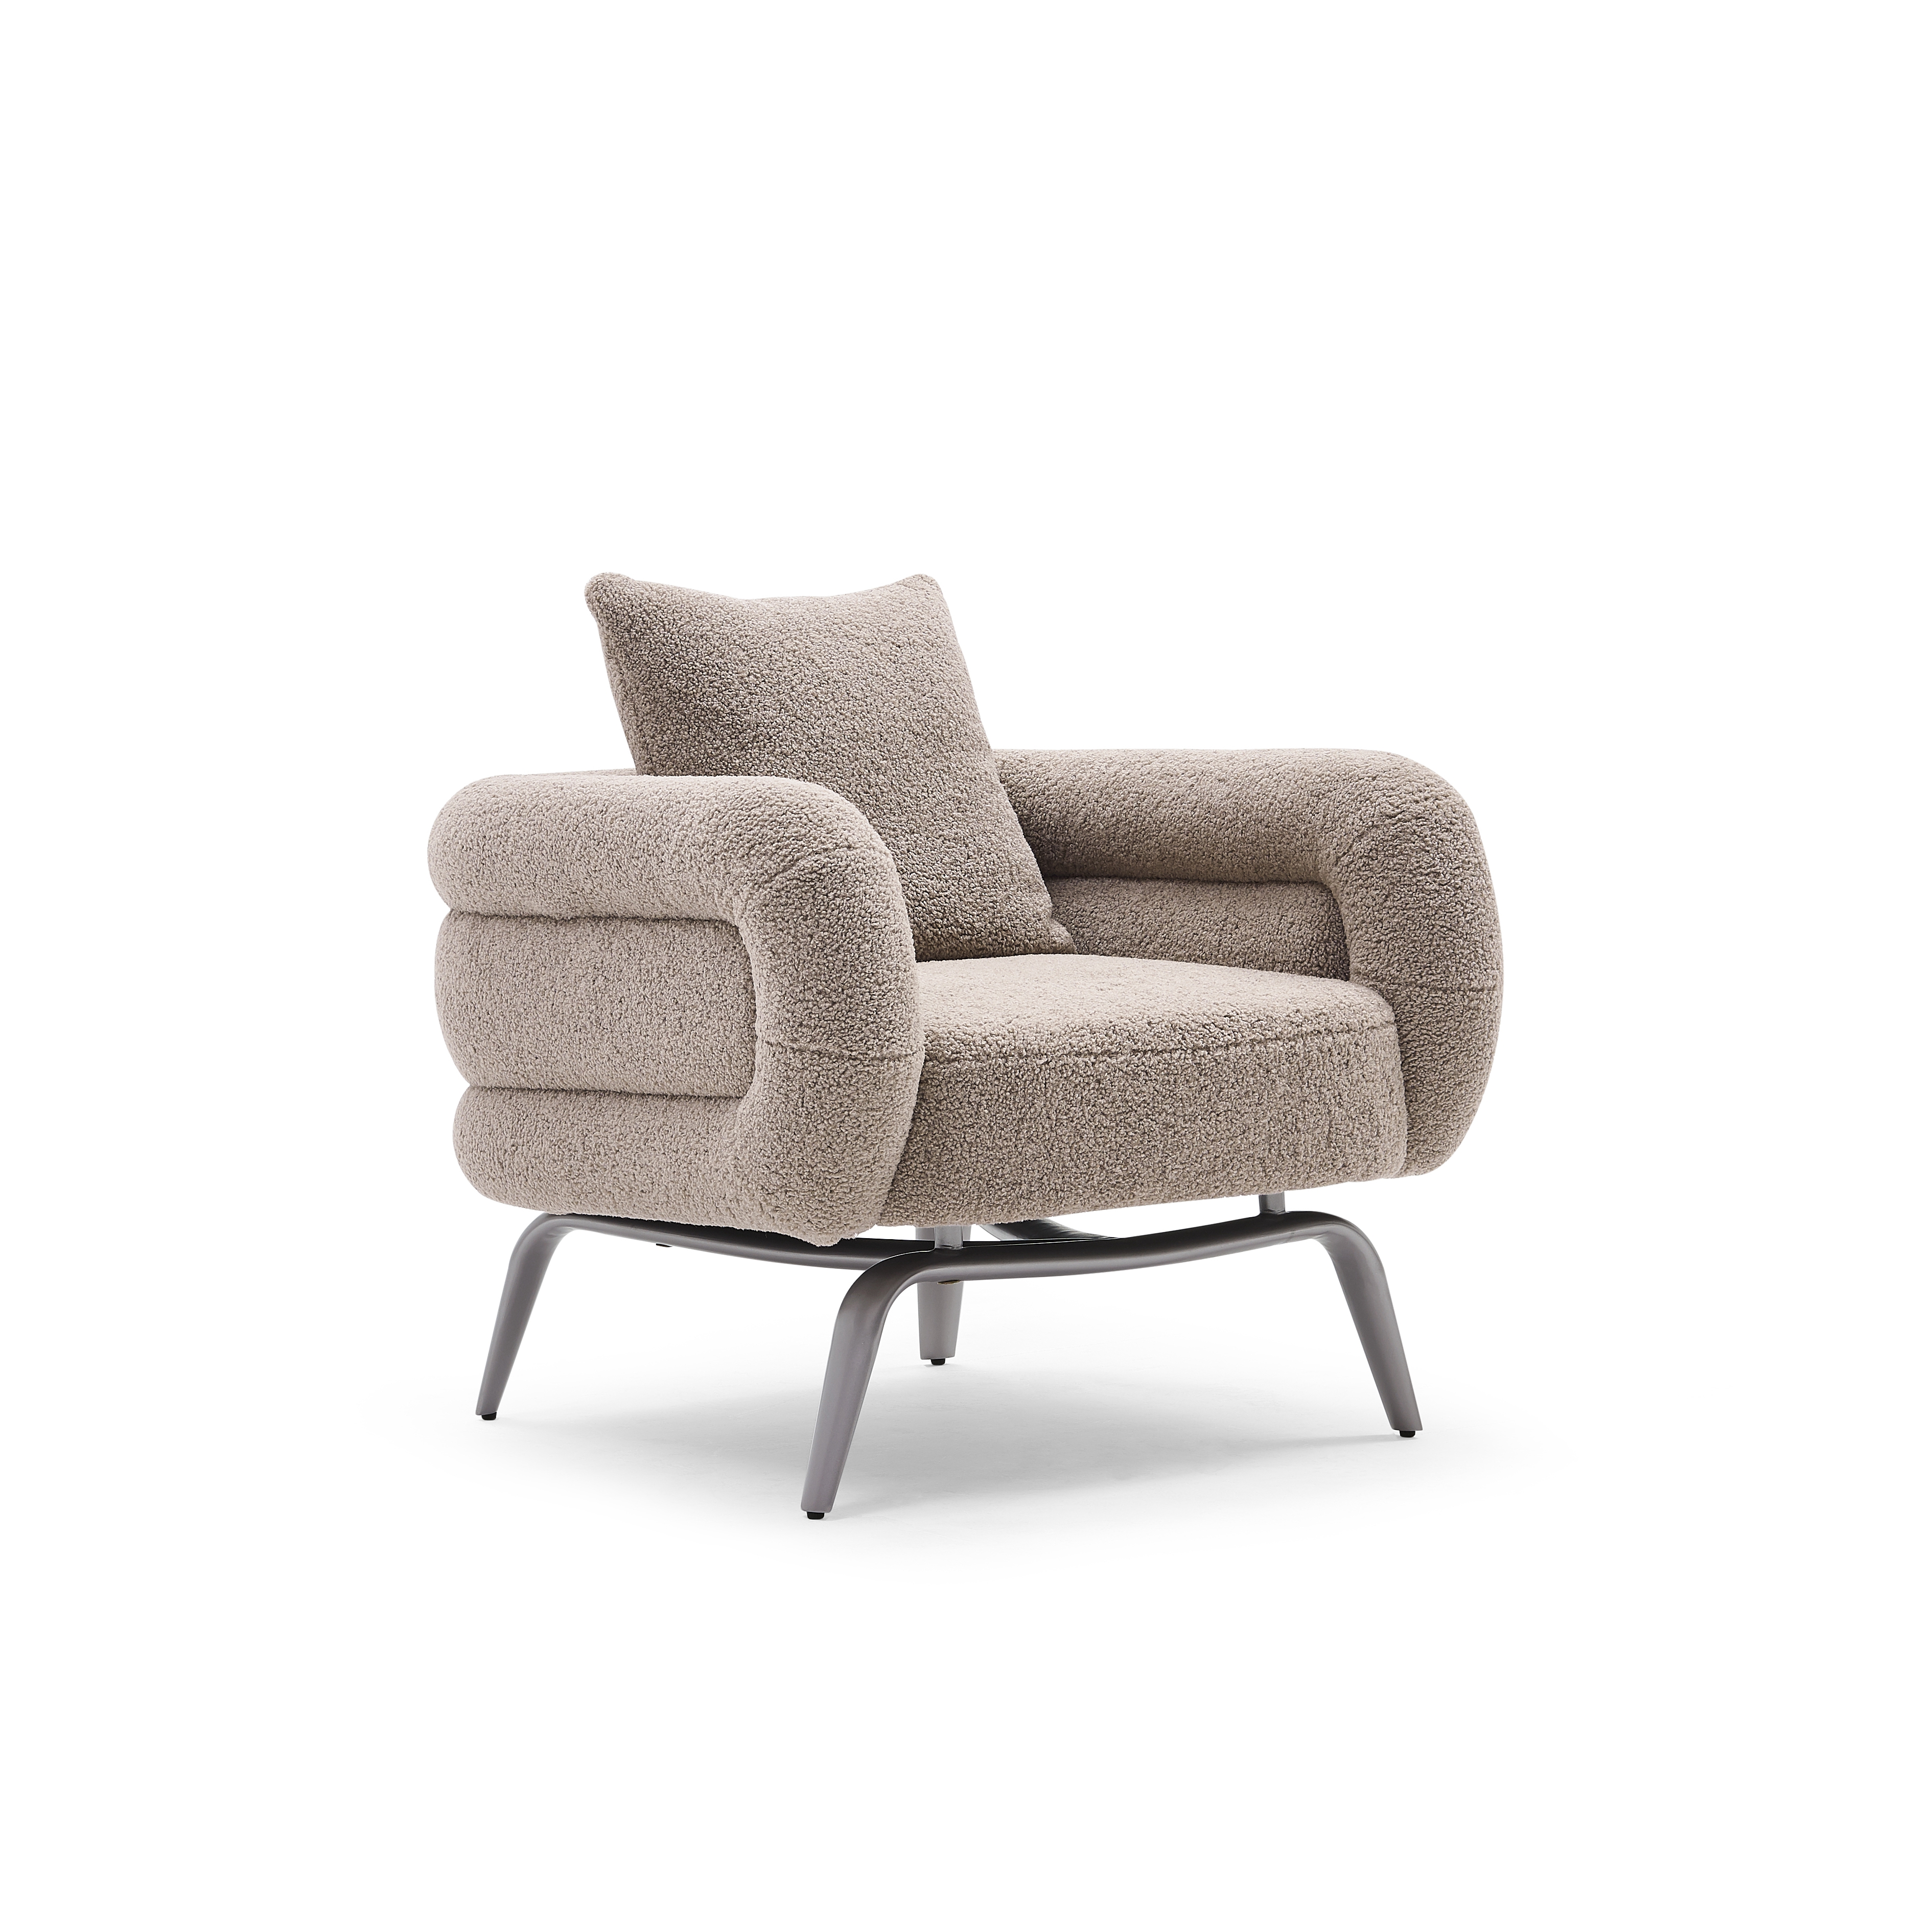 Italian Design Chair Sofa Living Room Furniture Sofa Chair Single Leather